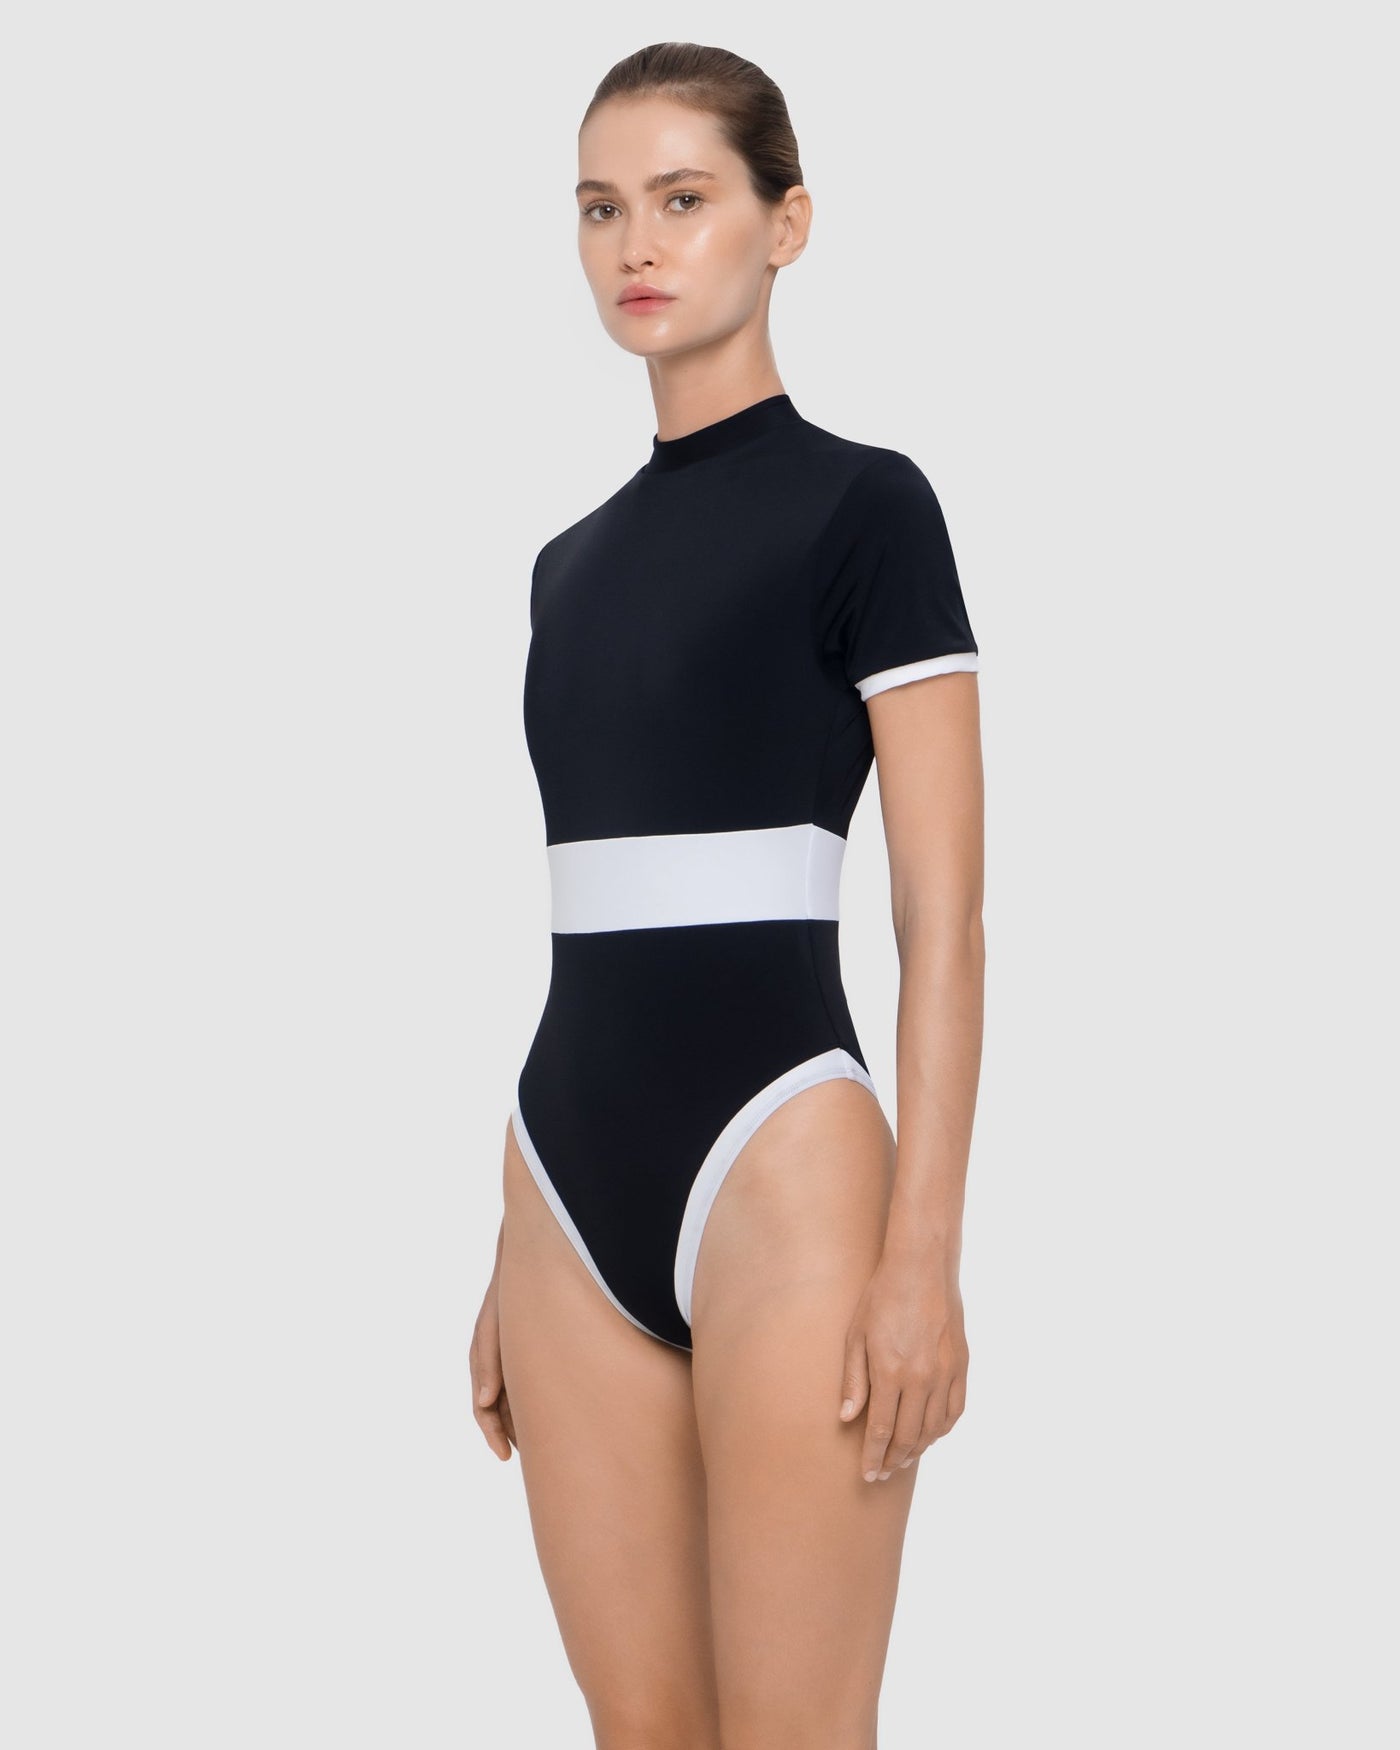 Reef Short Arms One Piece Swimsuit - Makara wear